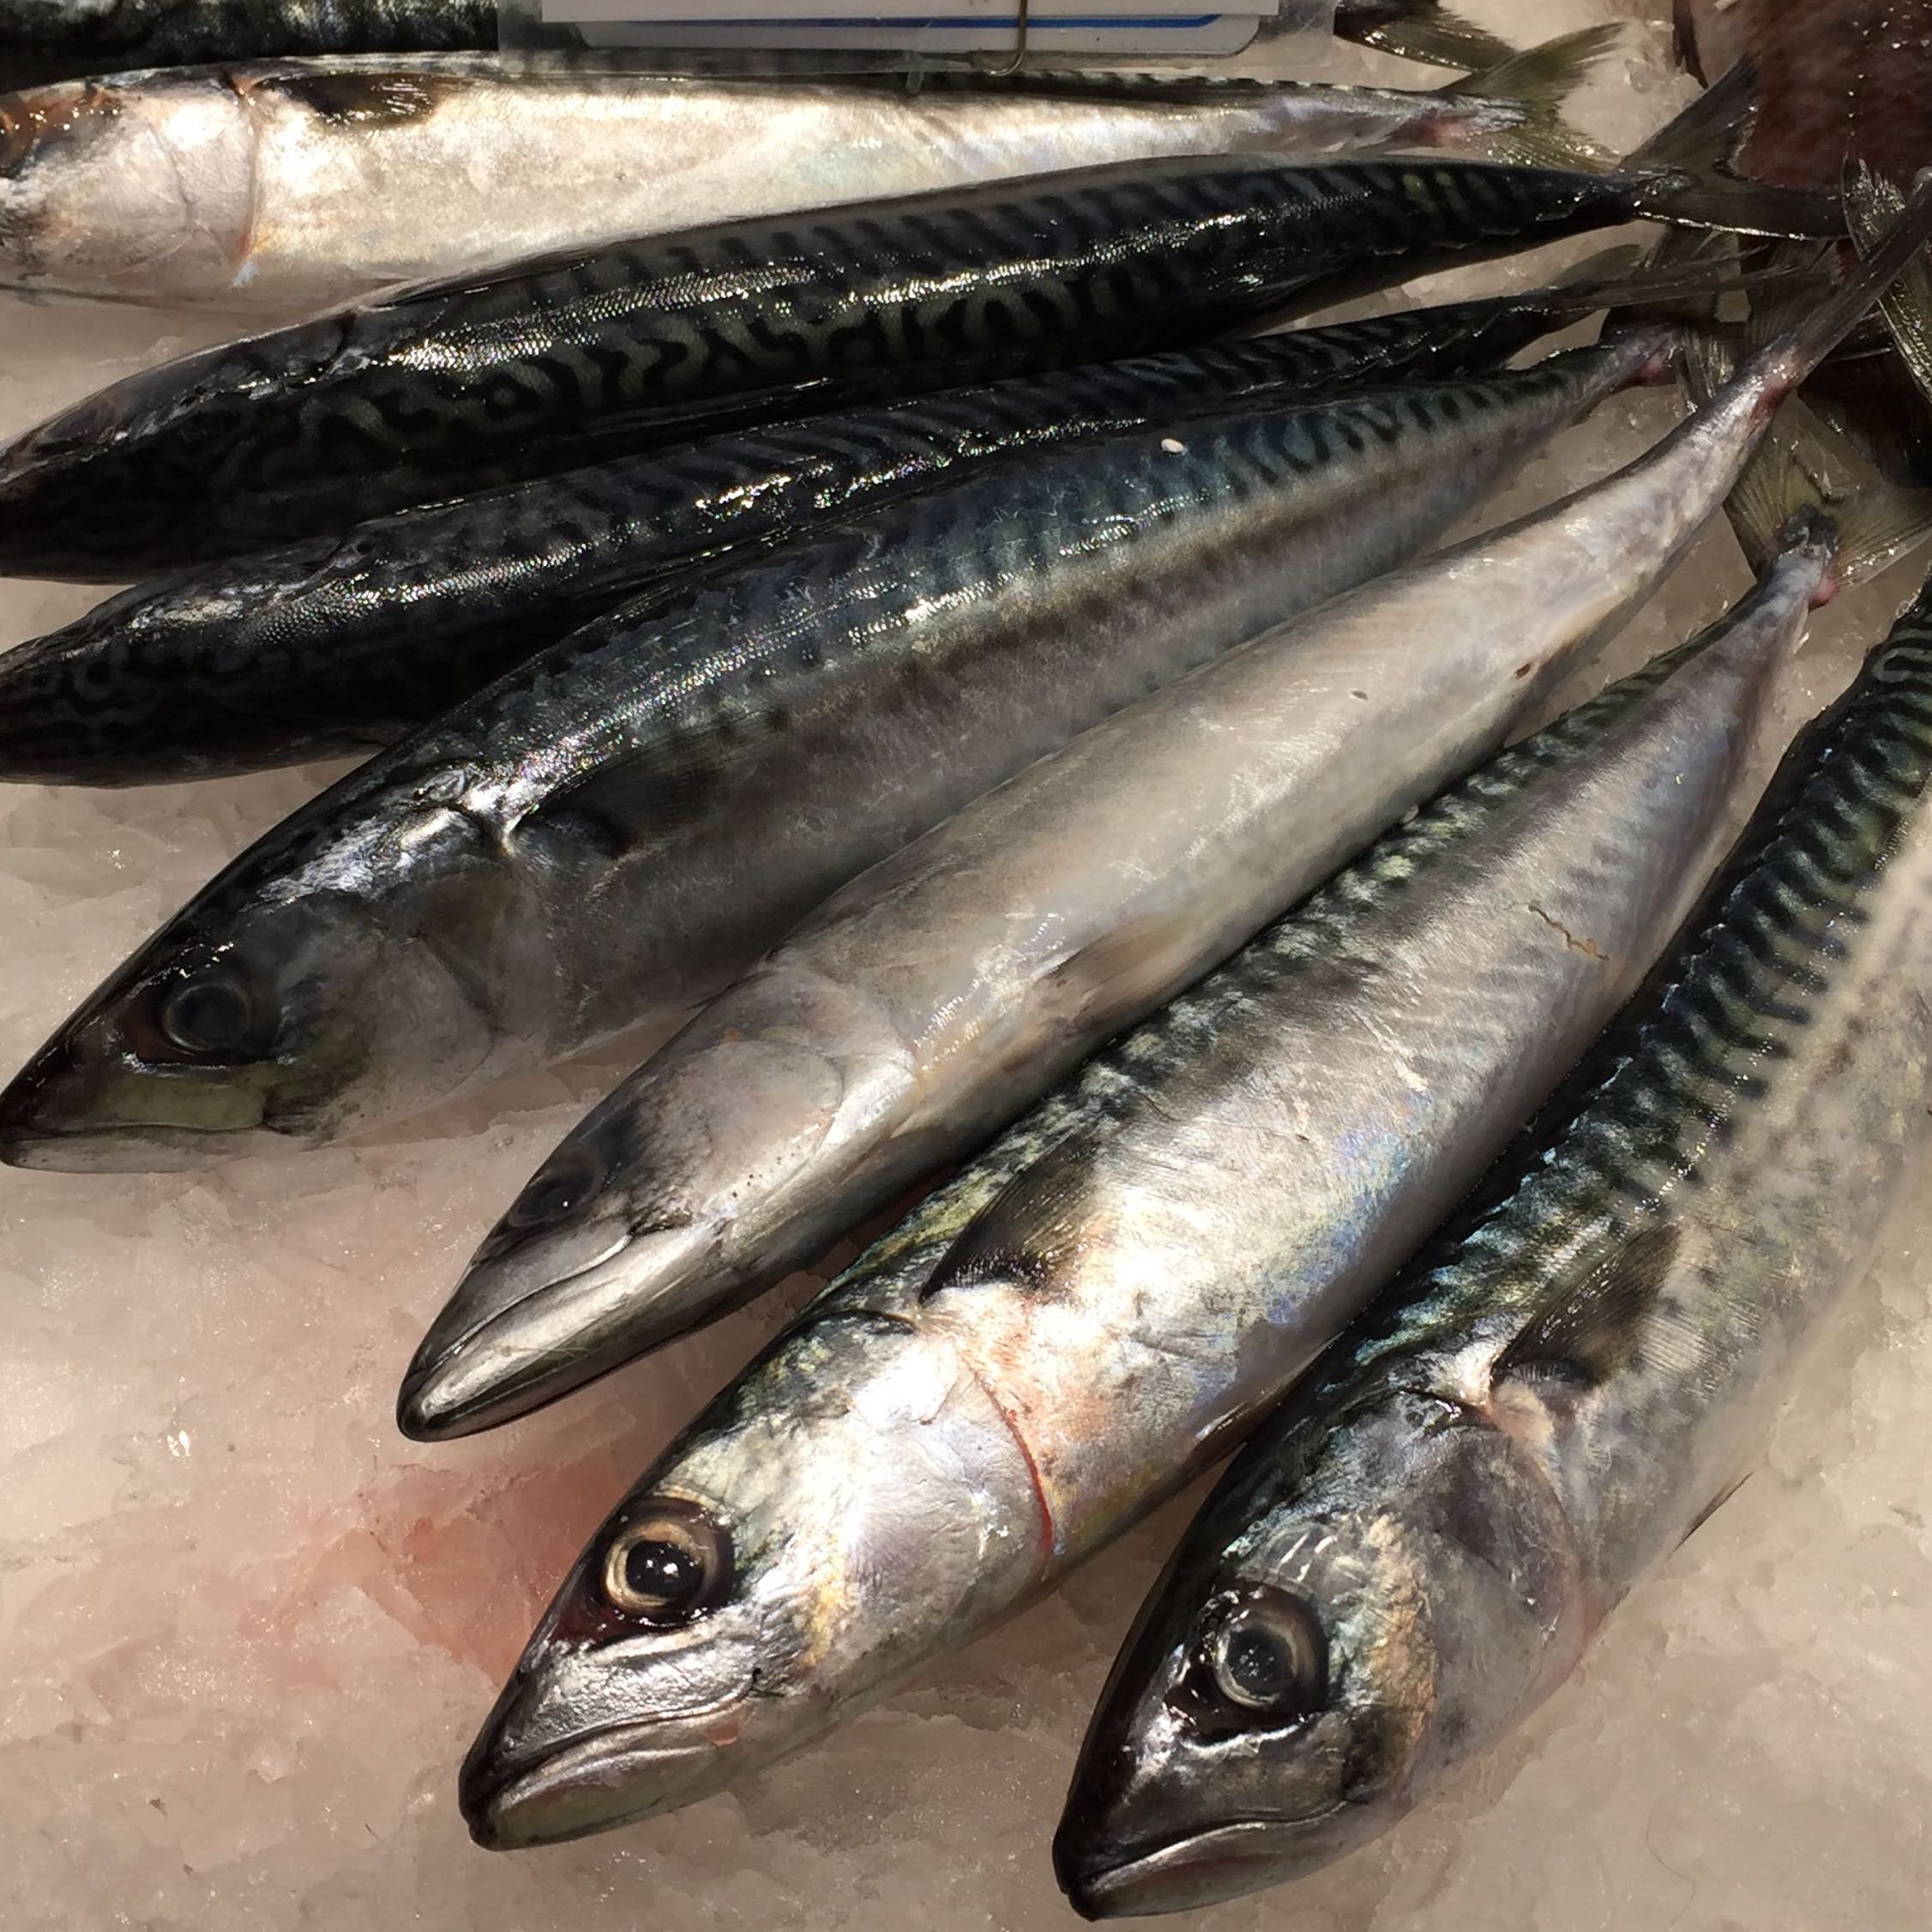 EU Investigating IUU Mackerel Fishing Again in Ireland